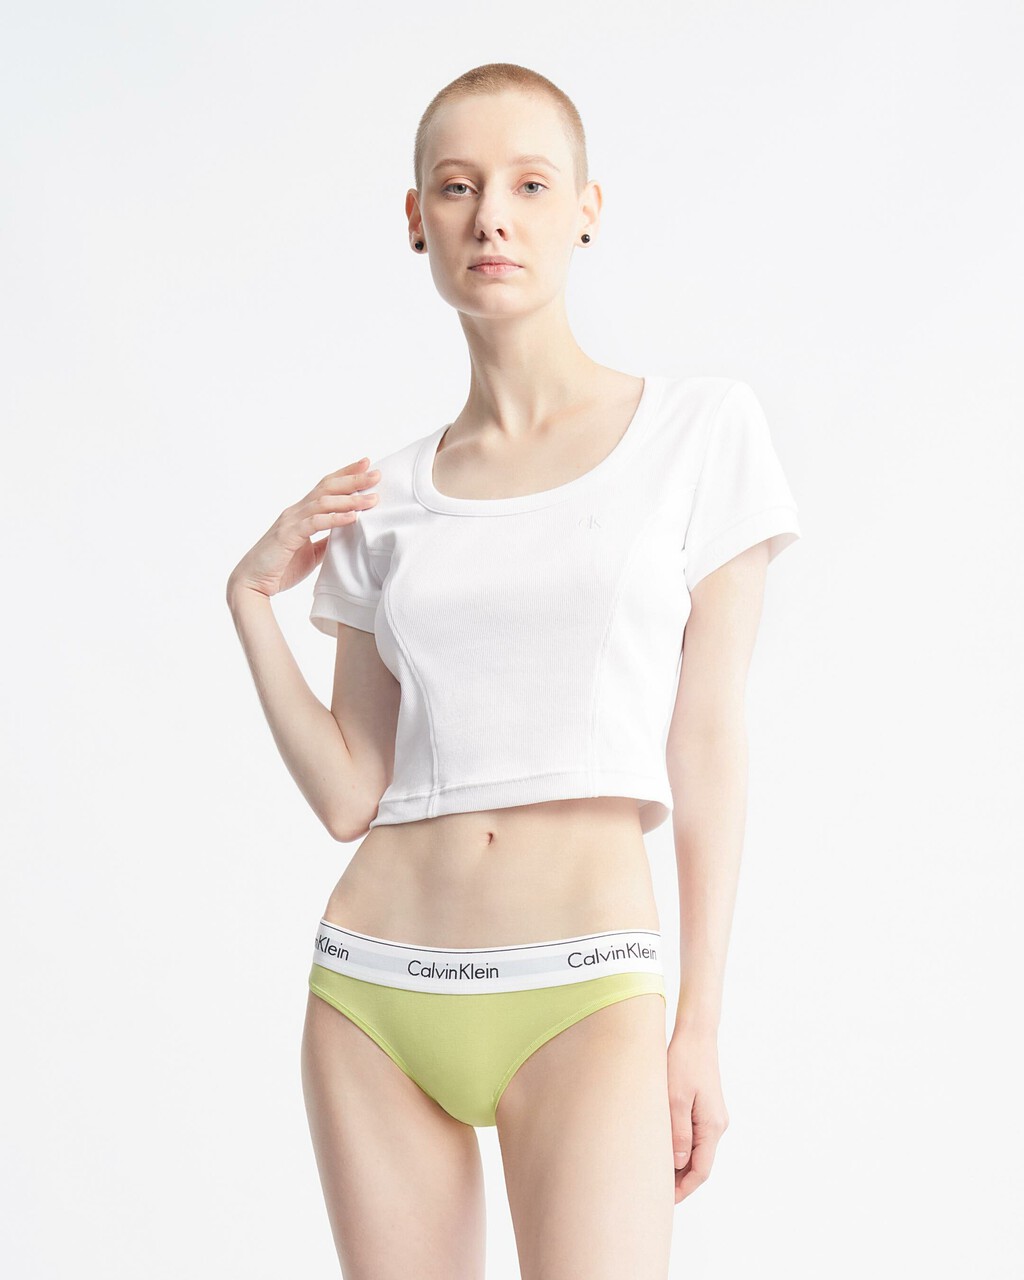 Modern Cotton Bikini, Sunny Lime, hi-res